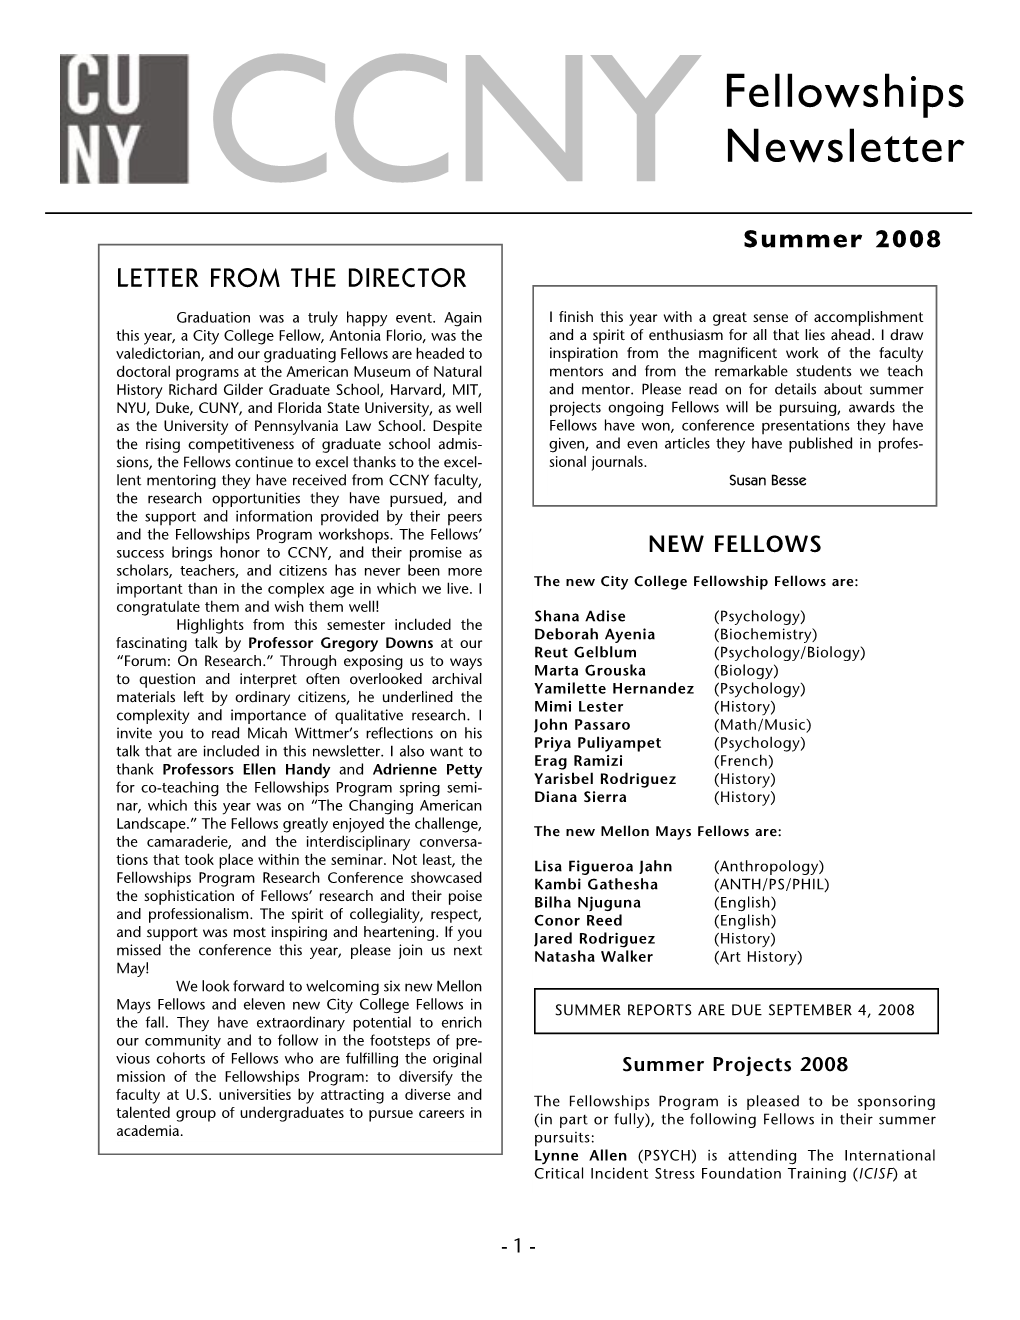 Ccny Newsletter Summer 08